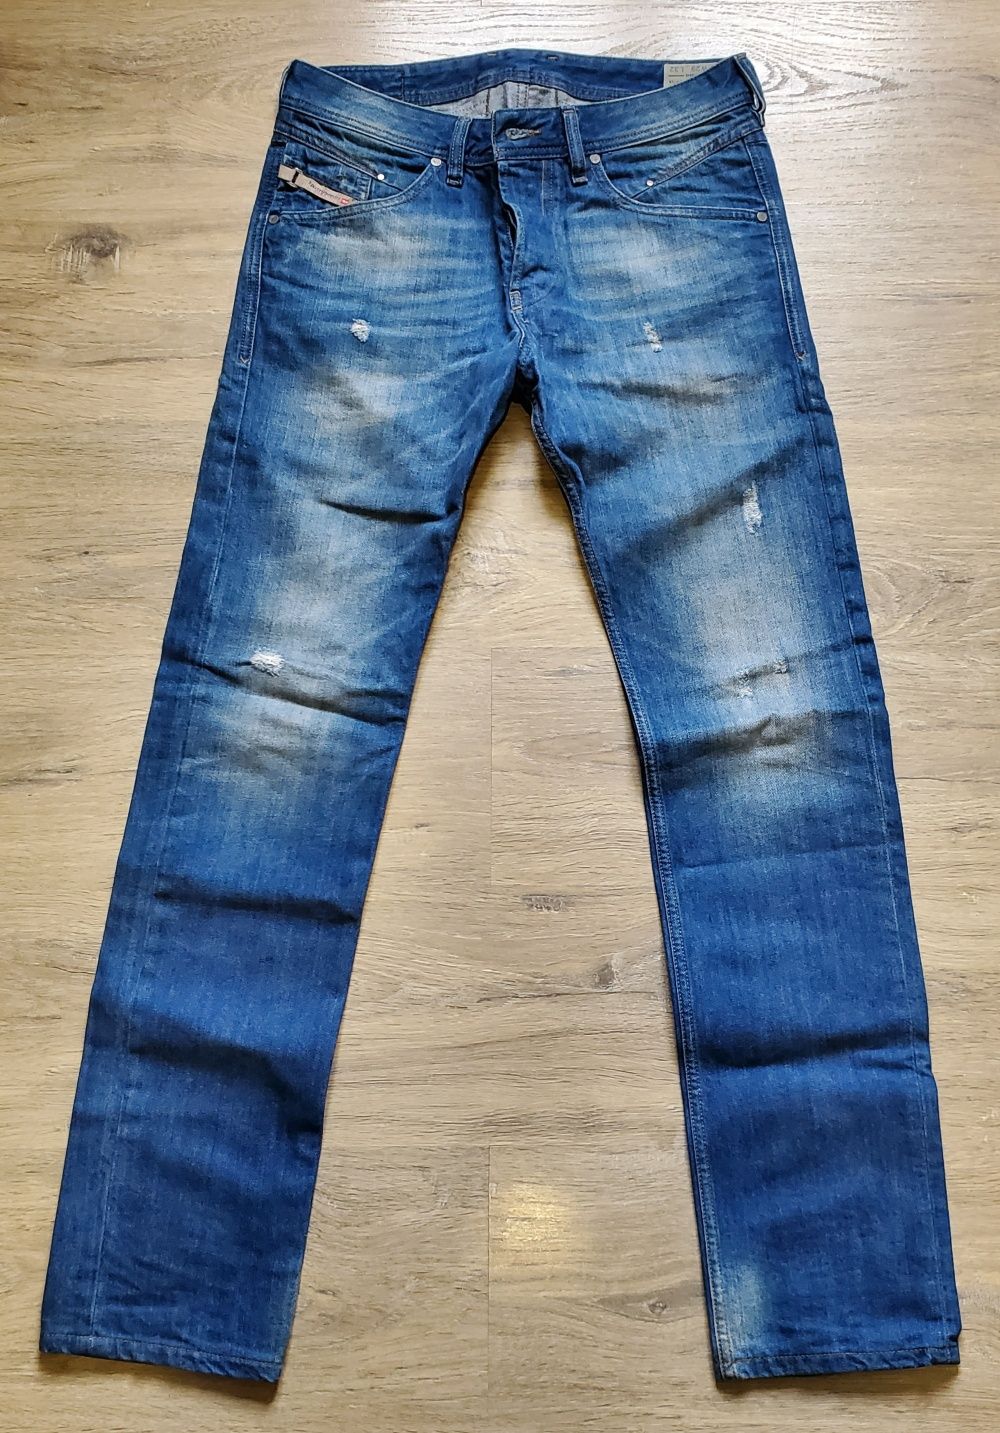 Джинсы Diesel Industry Jeans Original W29 L32 Made in Italy